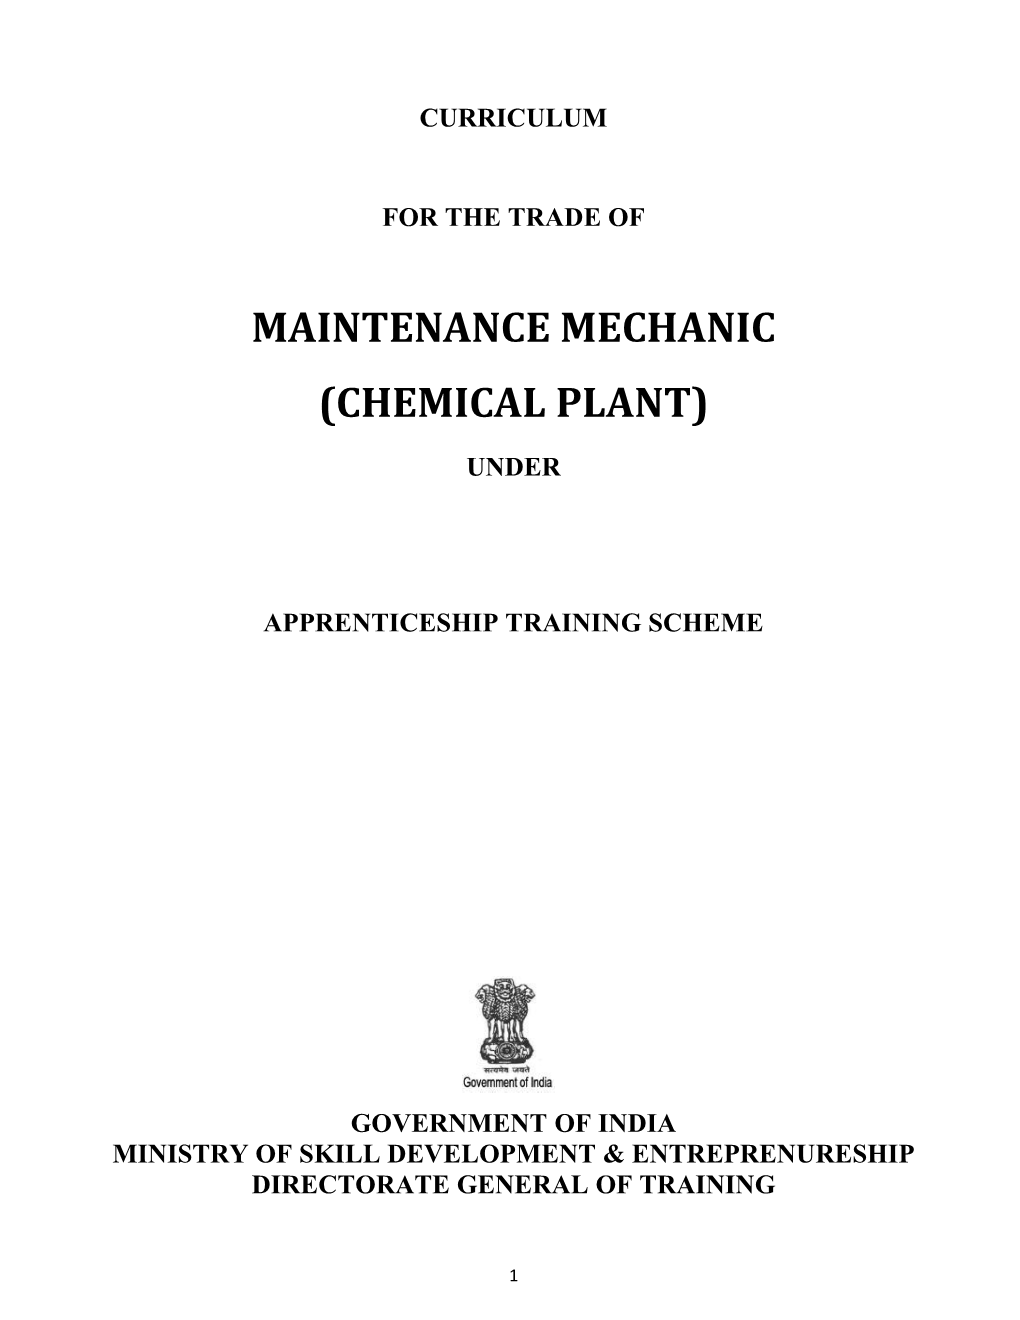 Maintenance Mechanic (Chemical Plant)